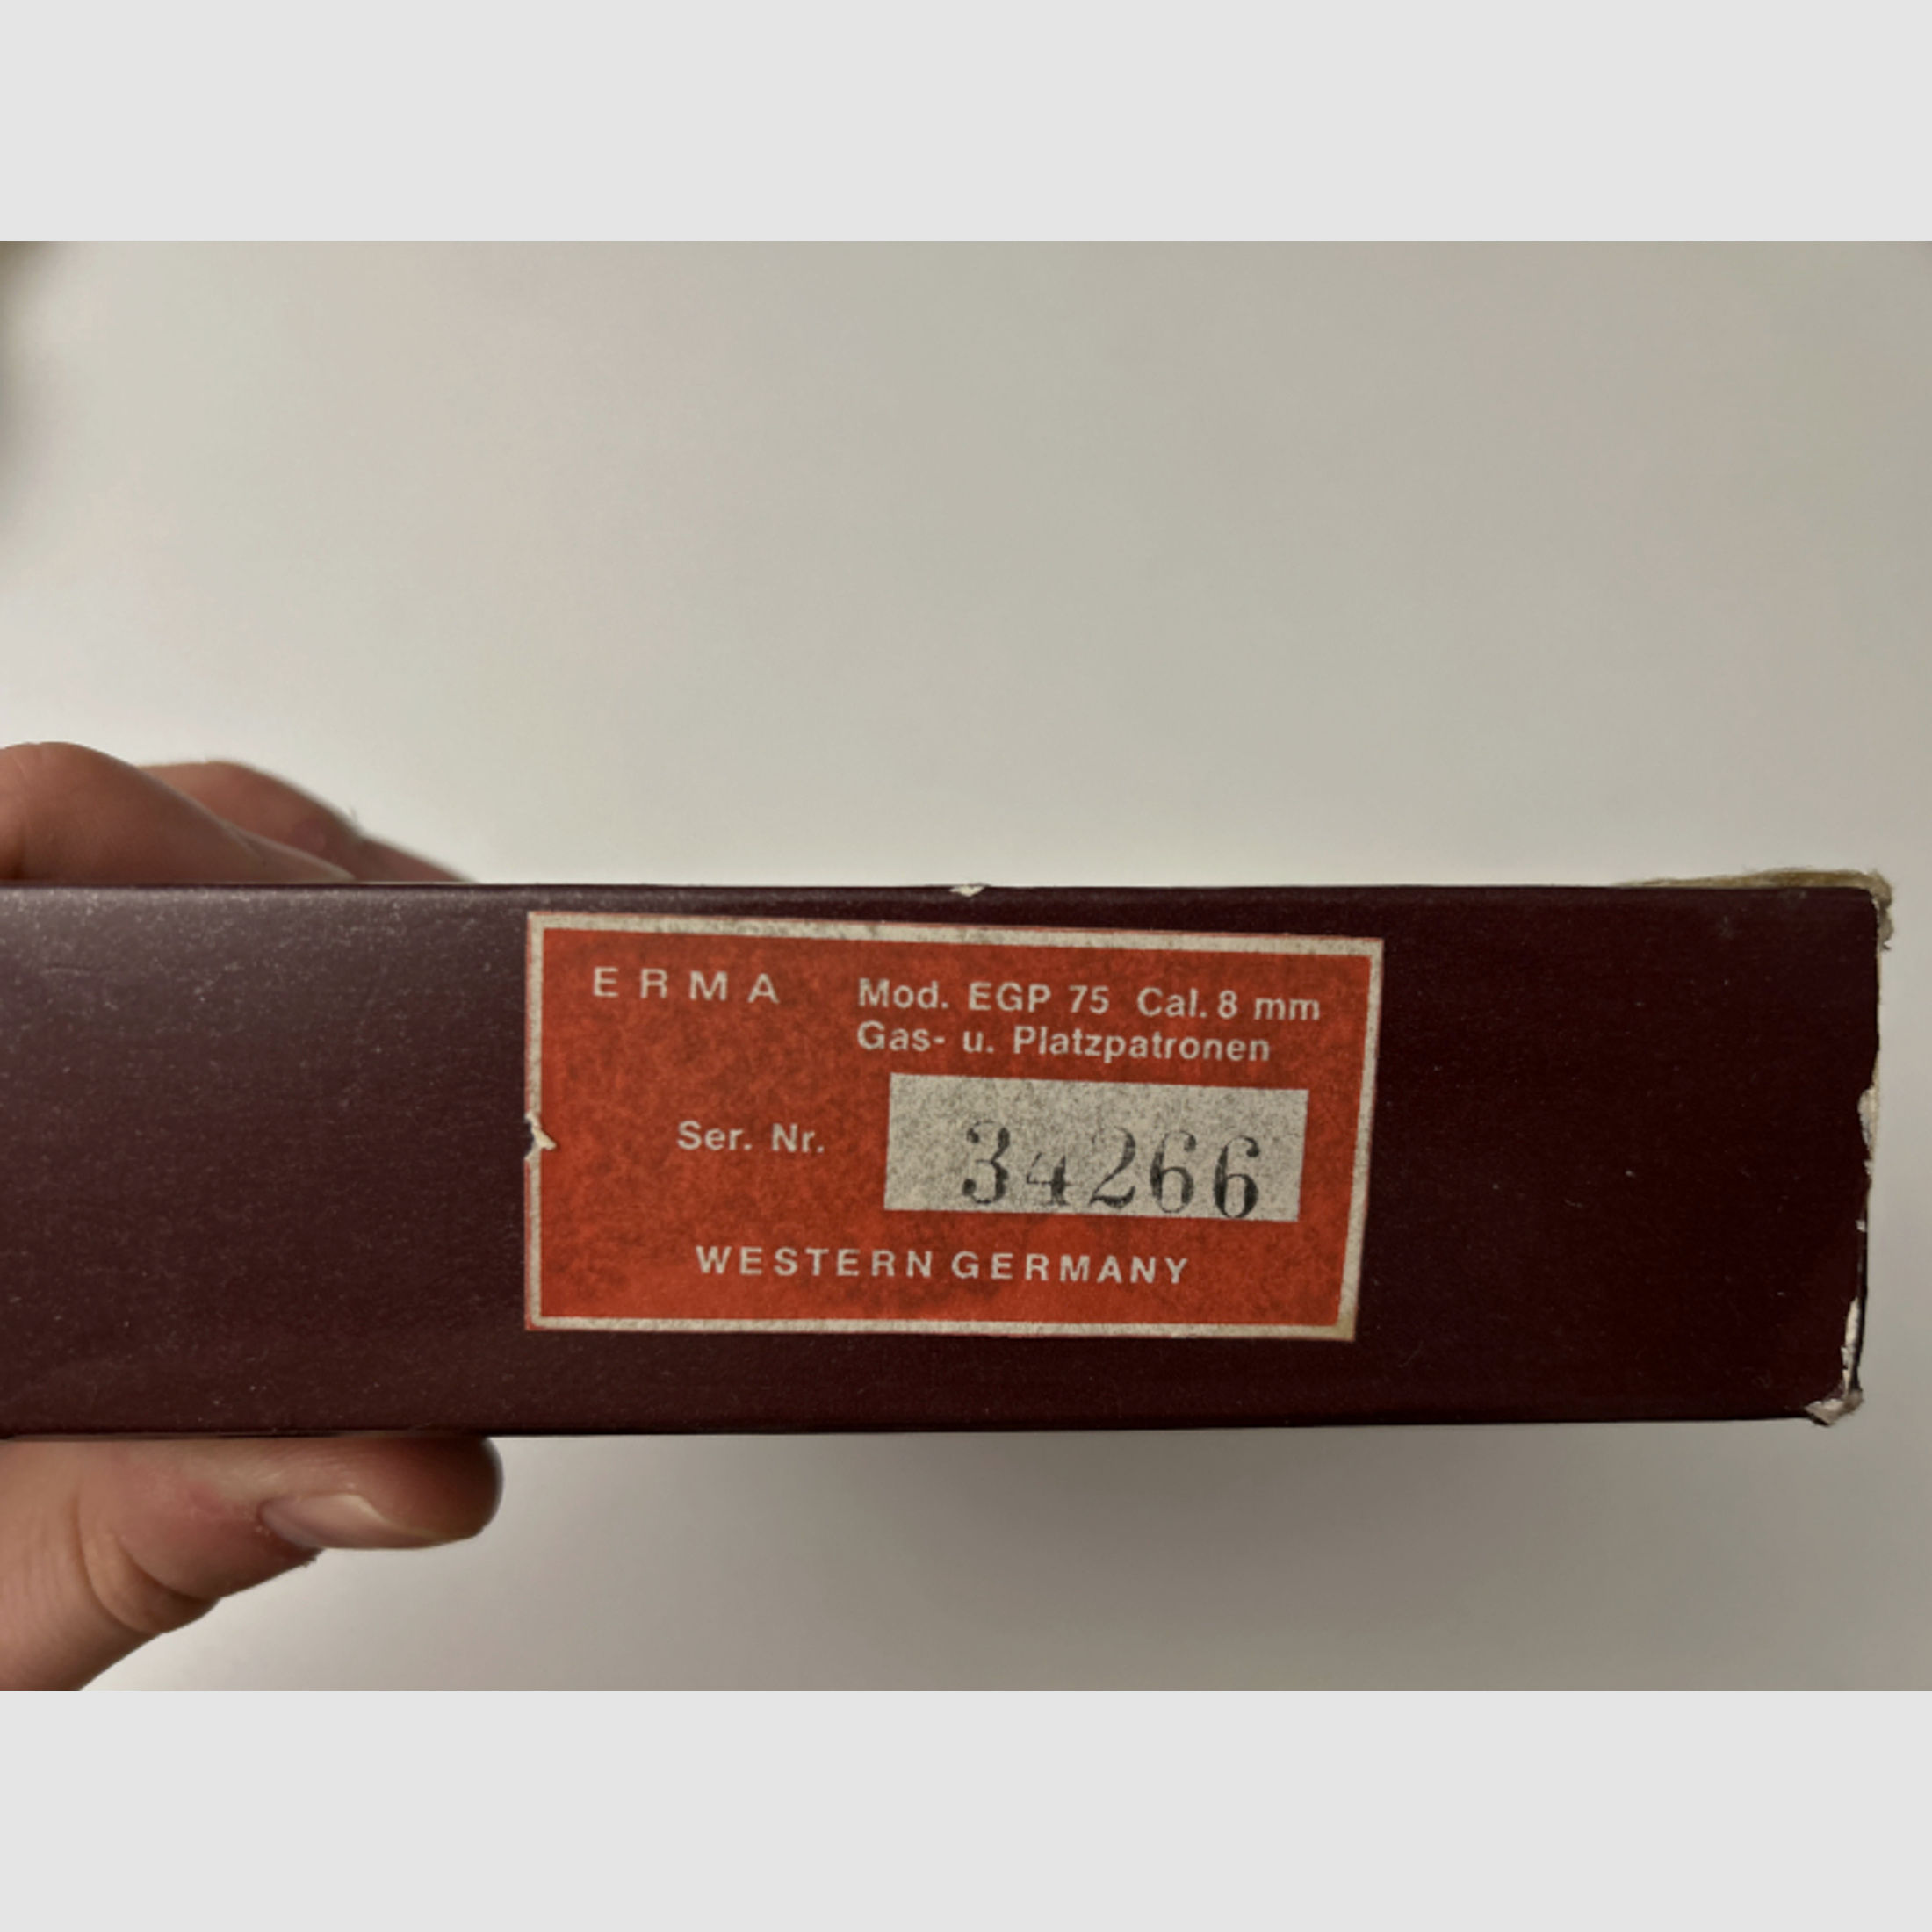 ERMA EGP 75S PTB 69/3 (!) 8mm Seriennumer 34266